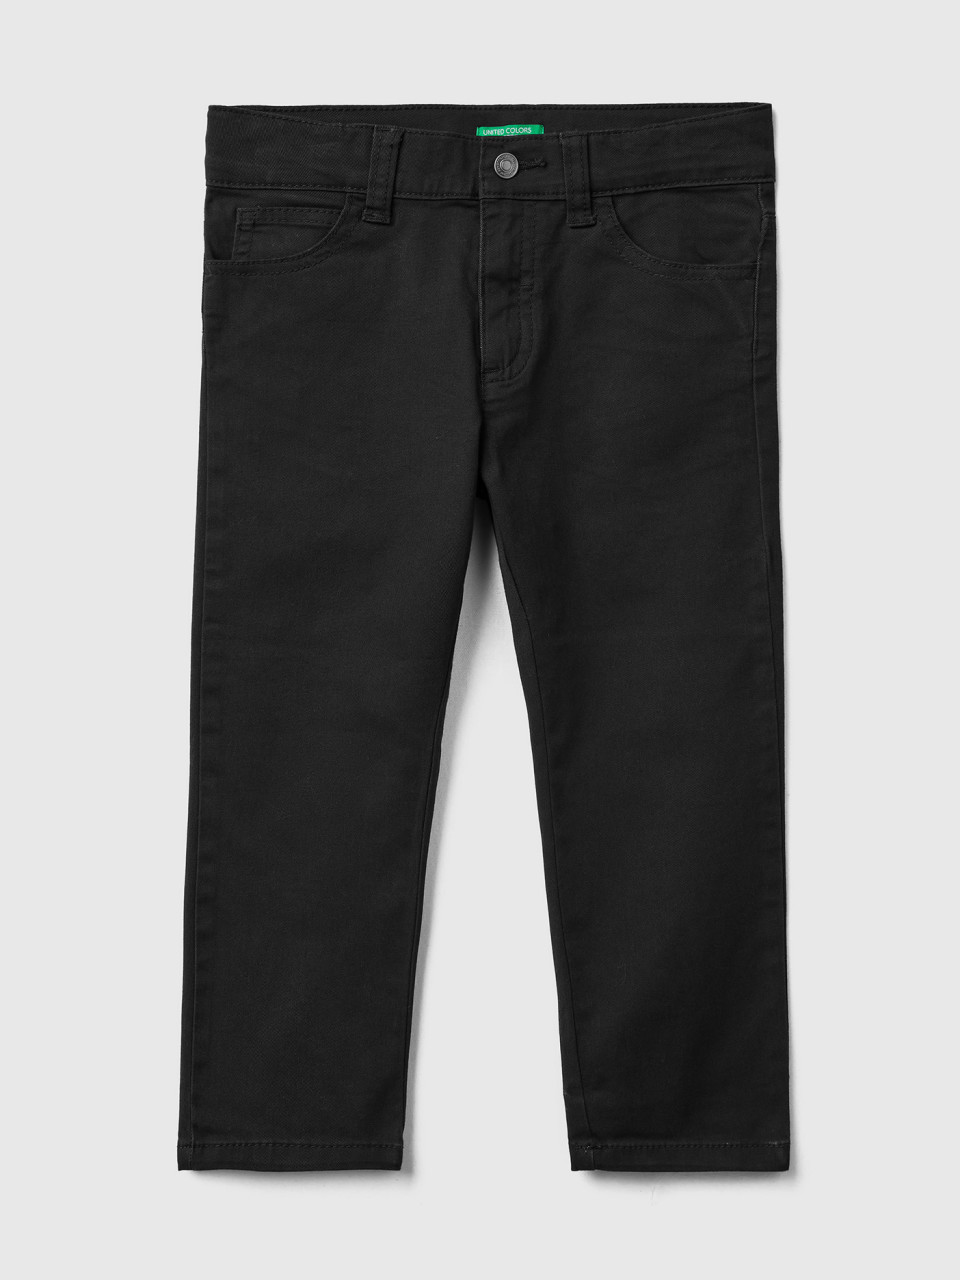 Benetton, Five-pocket Slim Fit Trousers, Black, Kids